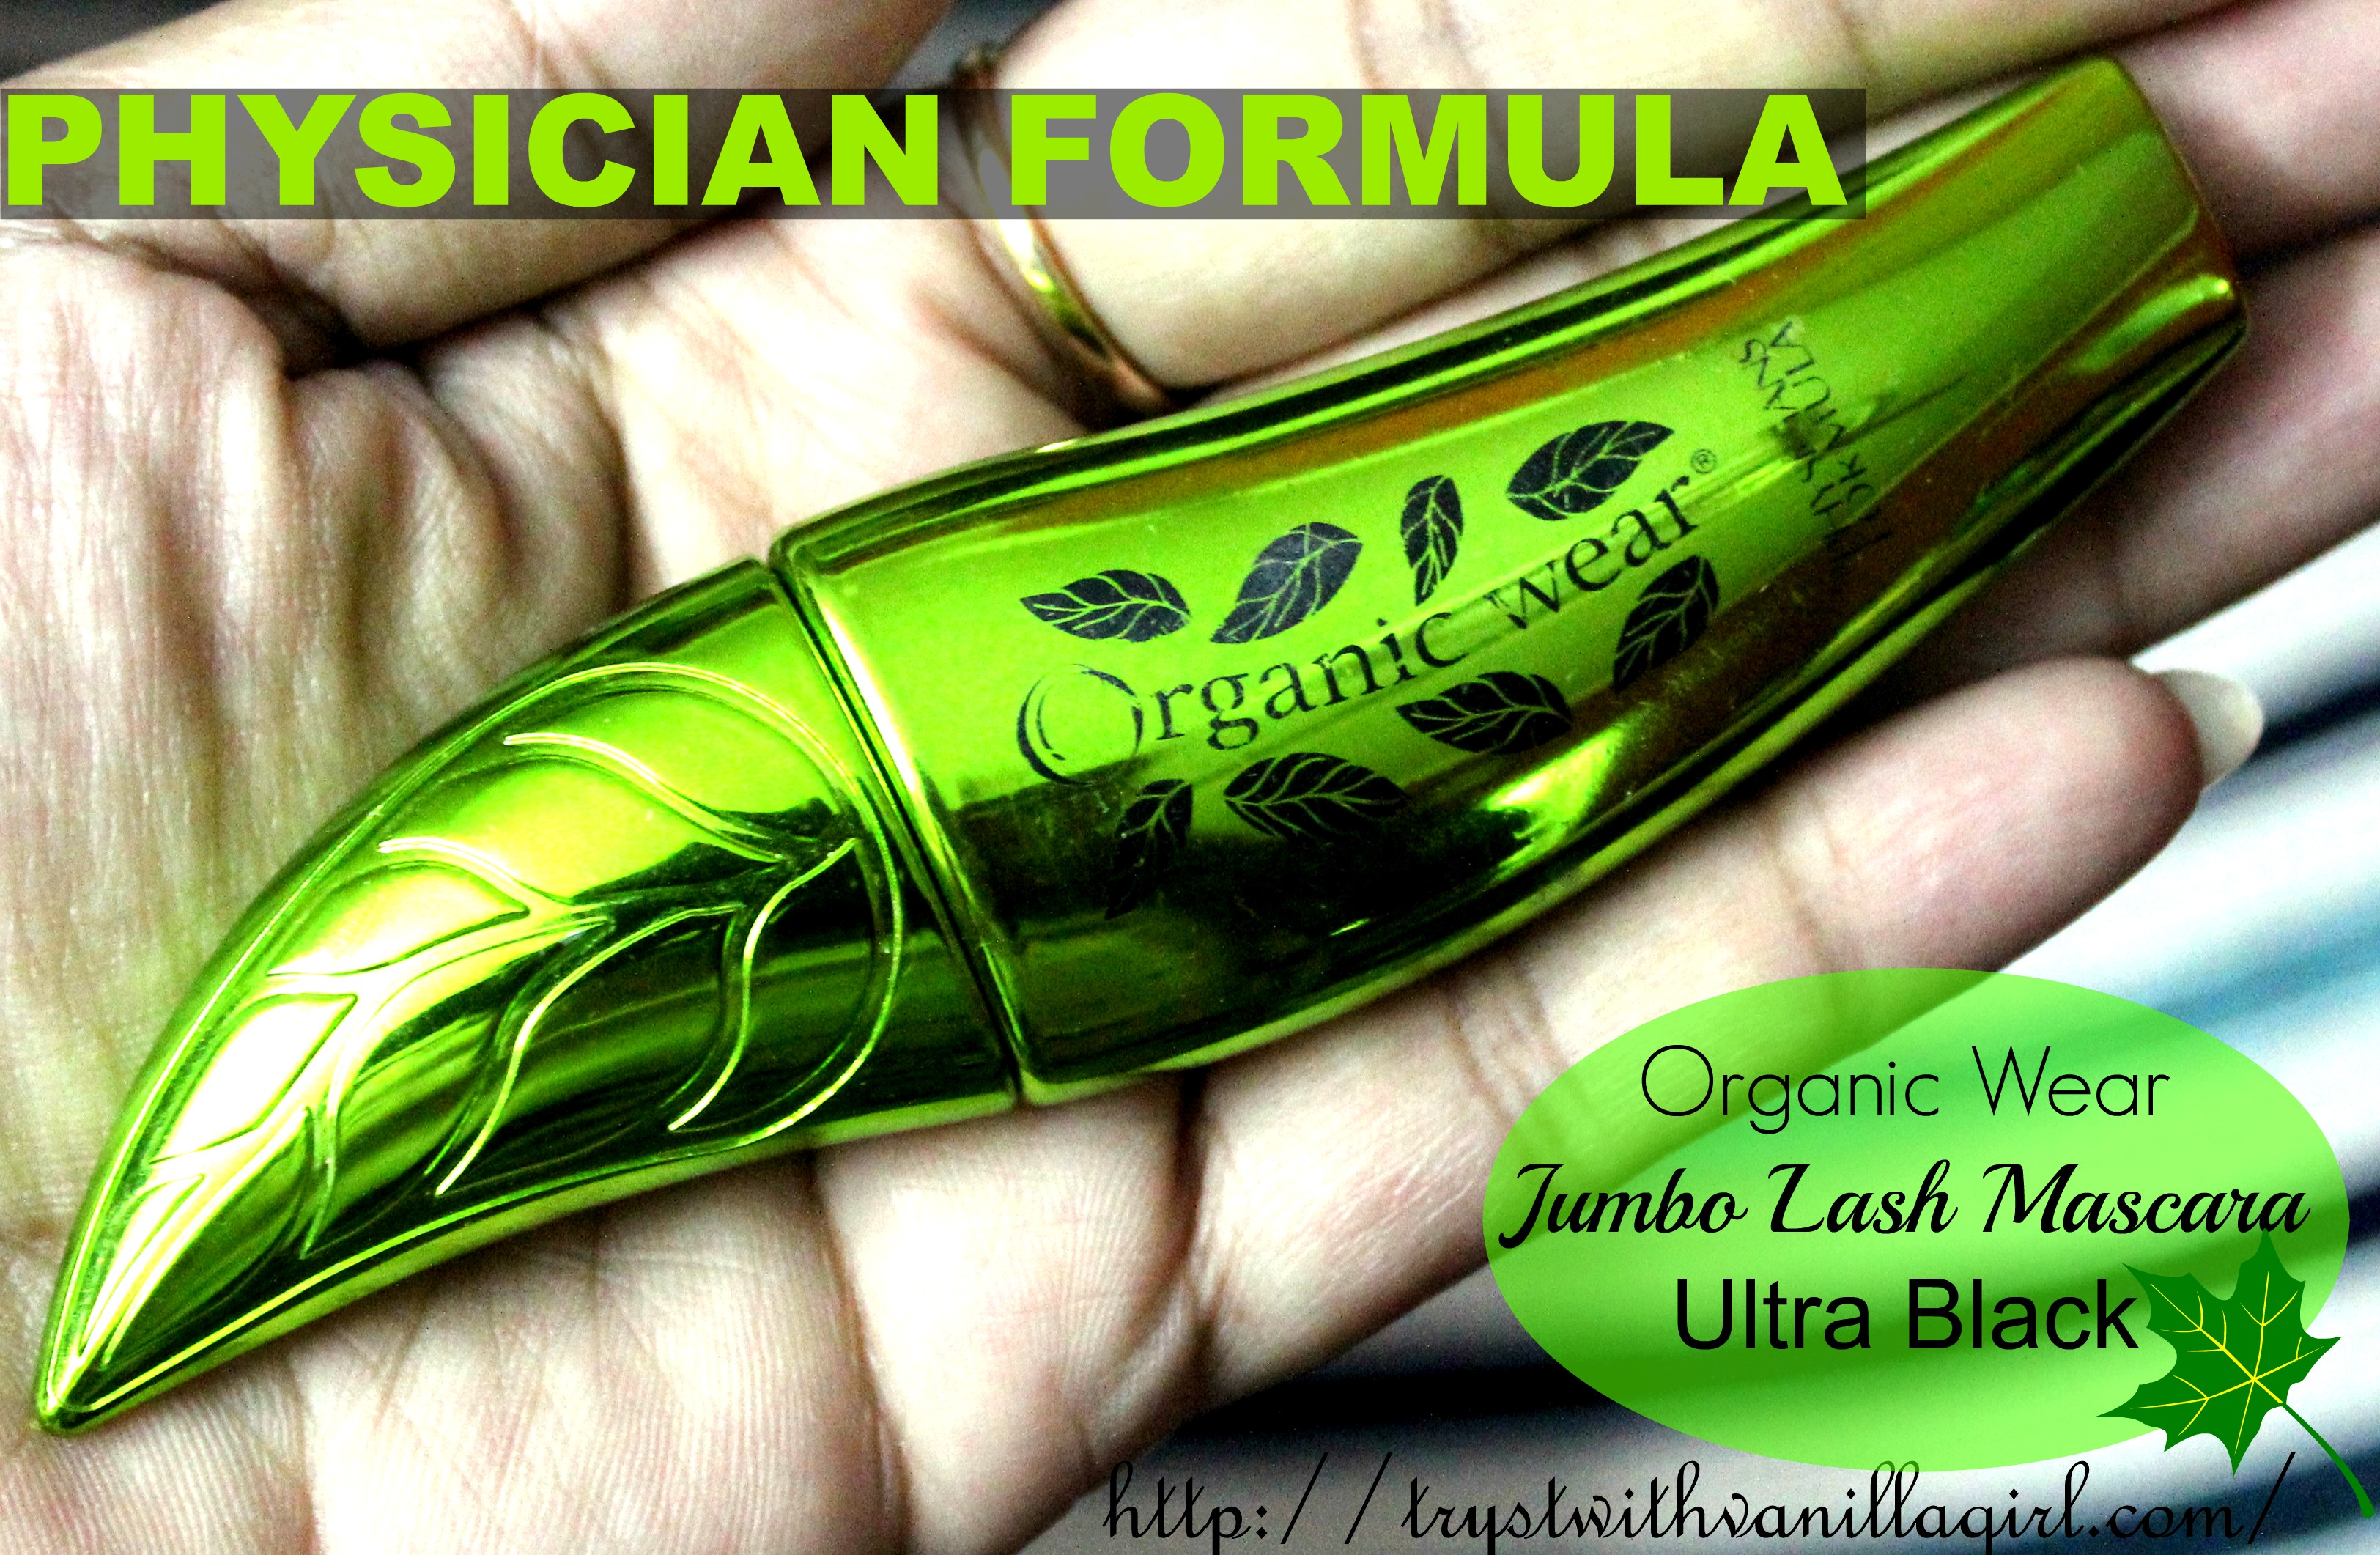 Physician Formula Jumbo Lash Mascara Review,Swatch,Photos,Demo,FOTD